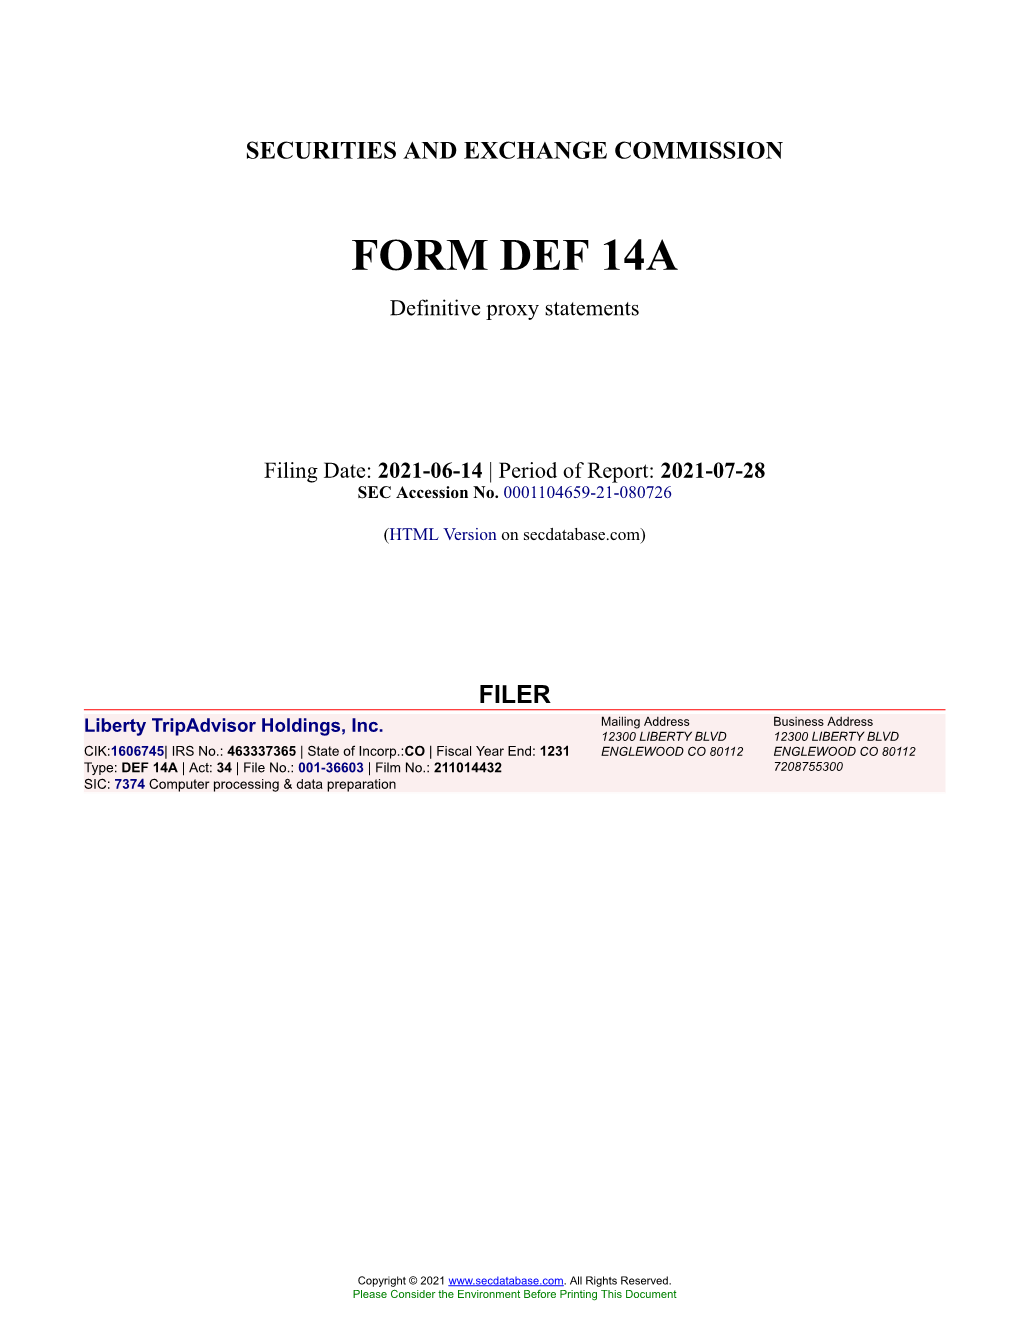 Liberty Tripadvisor Holdings, Inc. Form DEF 14A